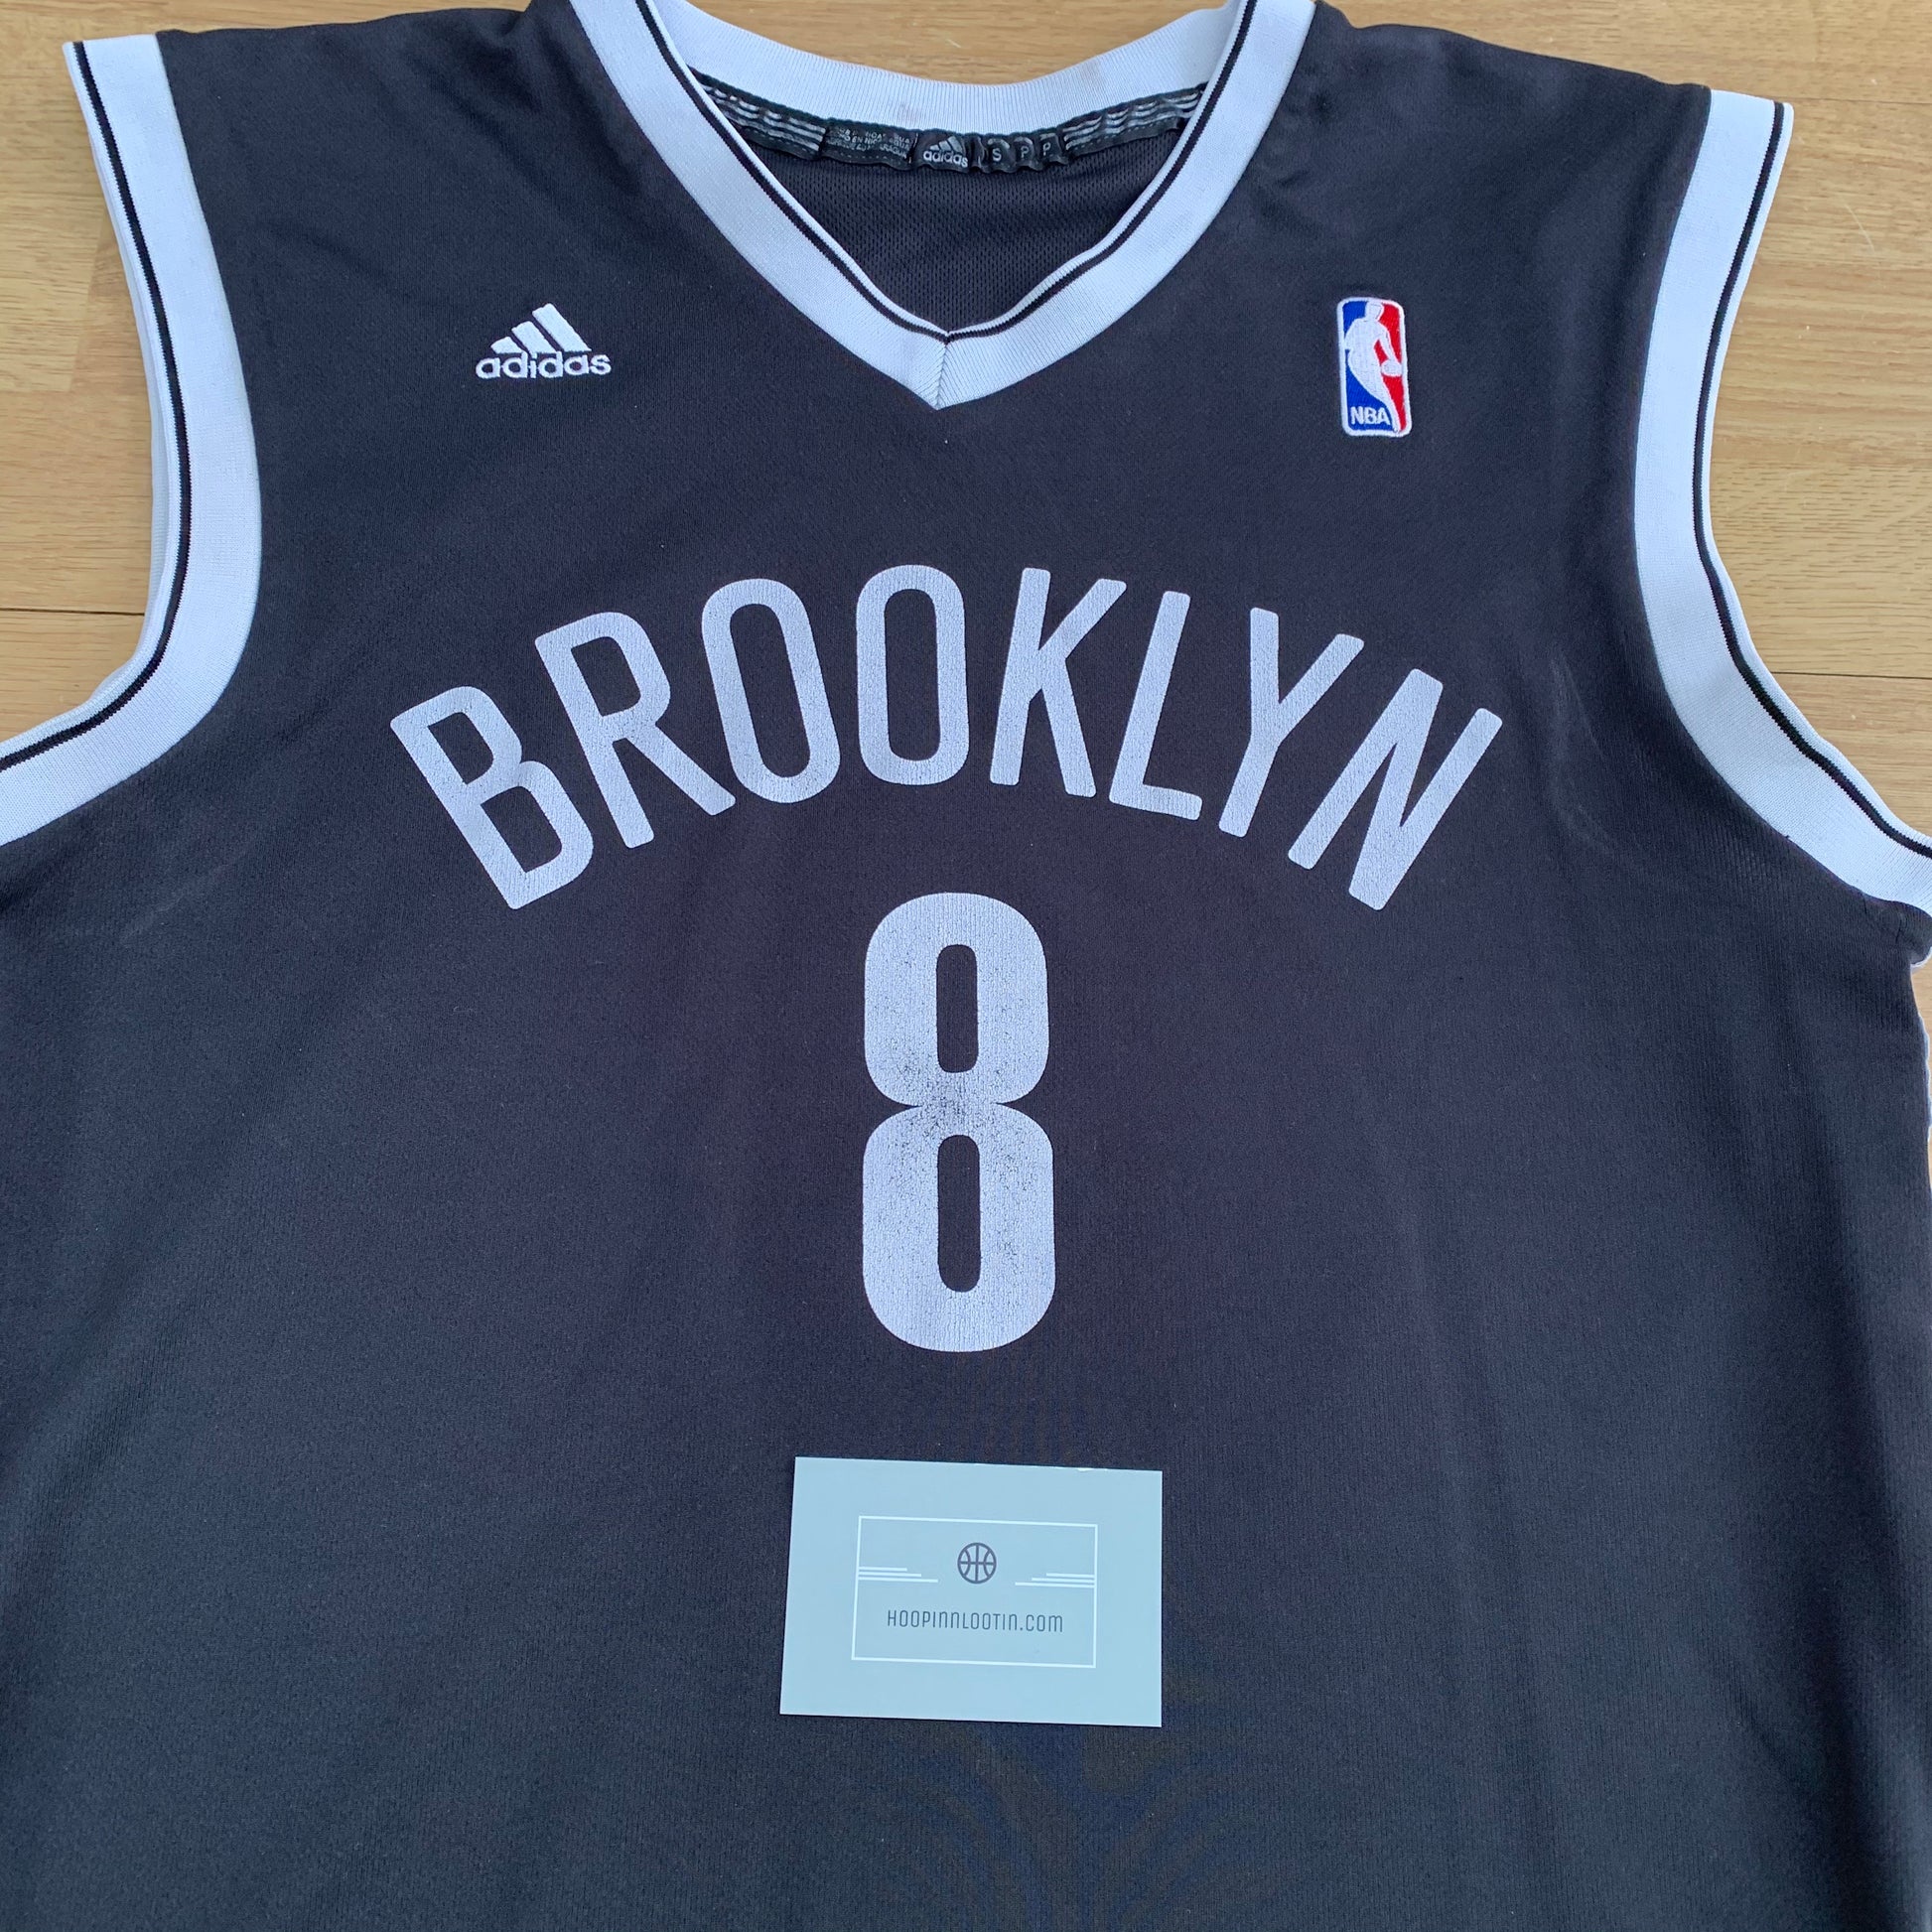 adidas, Other, Adidas Brooklyn Nets Jersey